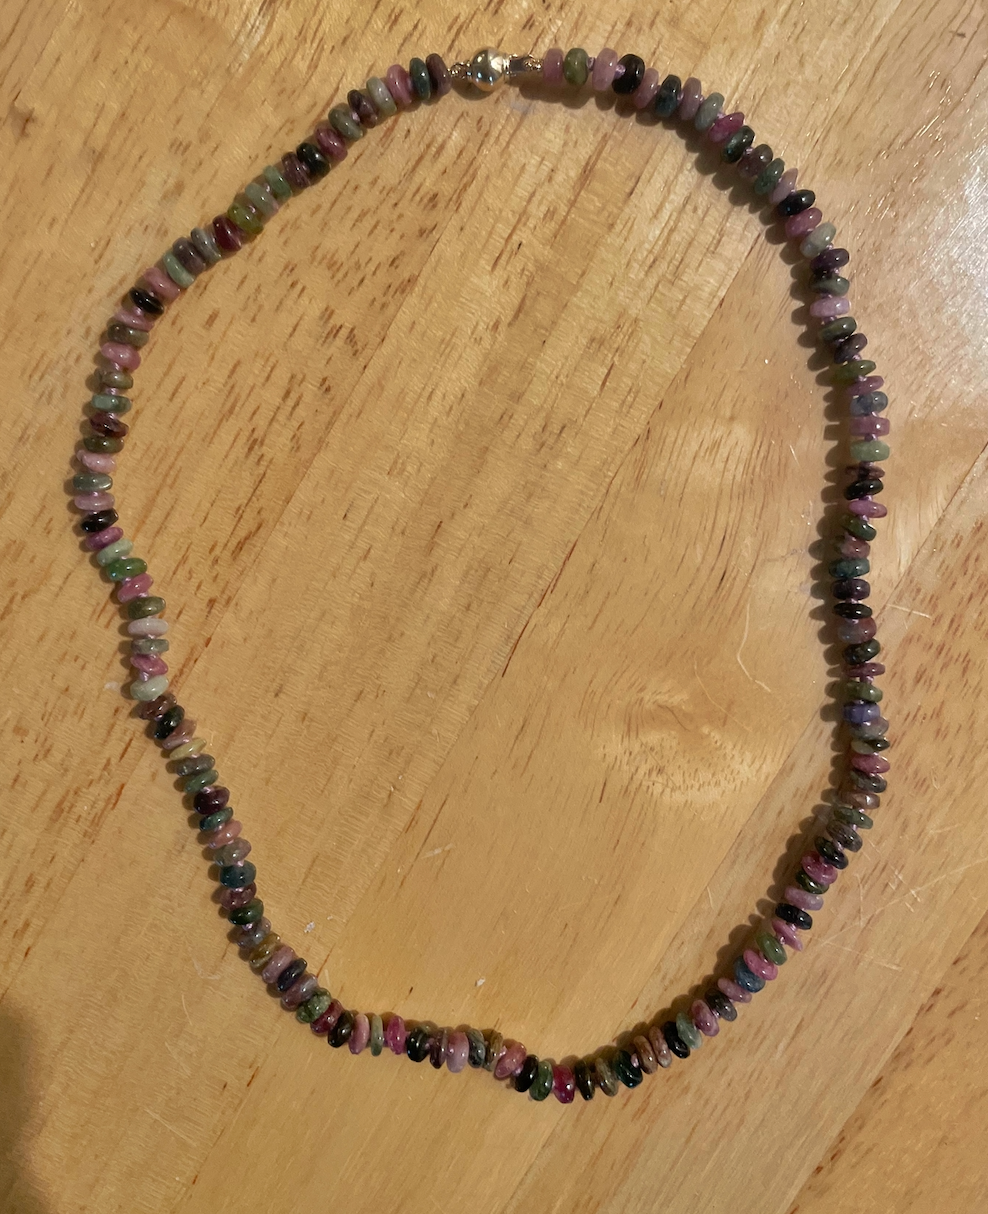 Beaded Tourmaline Necklace - Medium Size